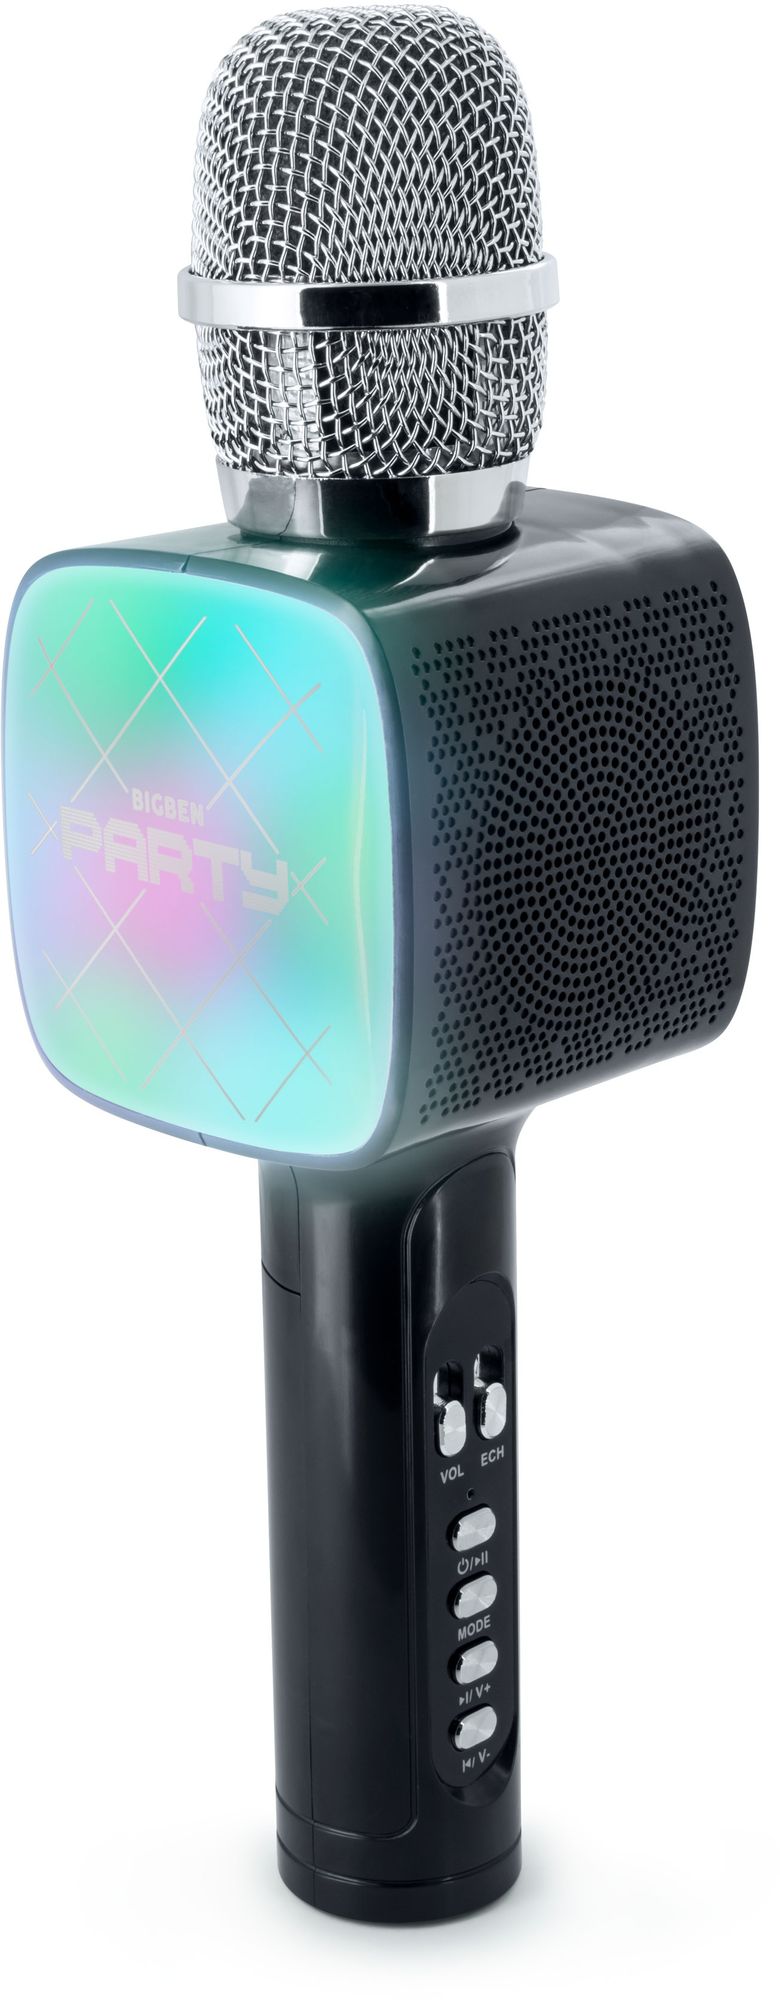 Bigben - PARTY BTMIC black Wireless bestellen Light + with Effects online - Microphone Speaker 